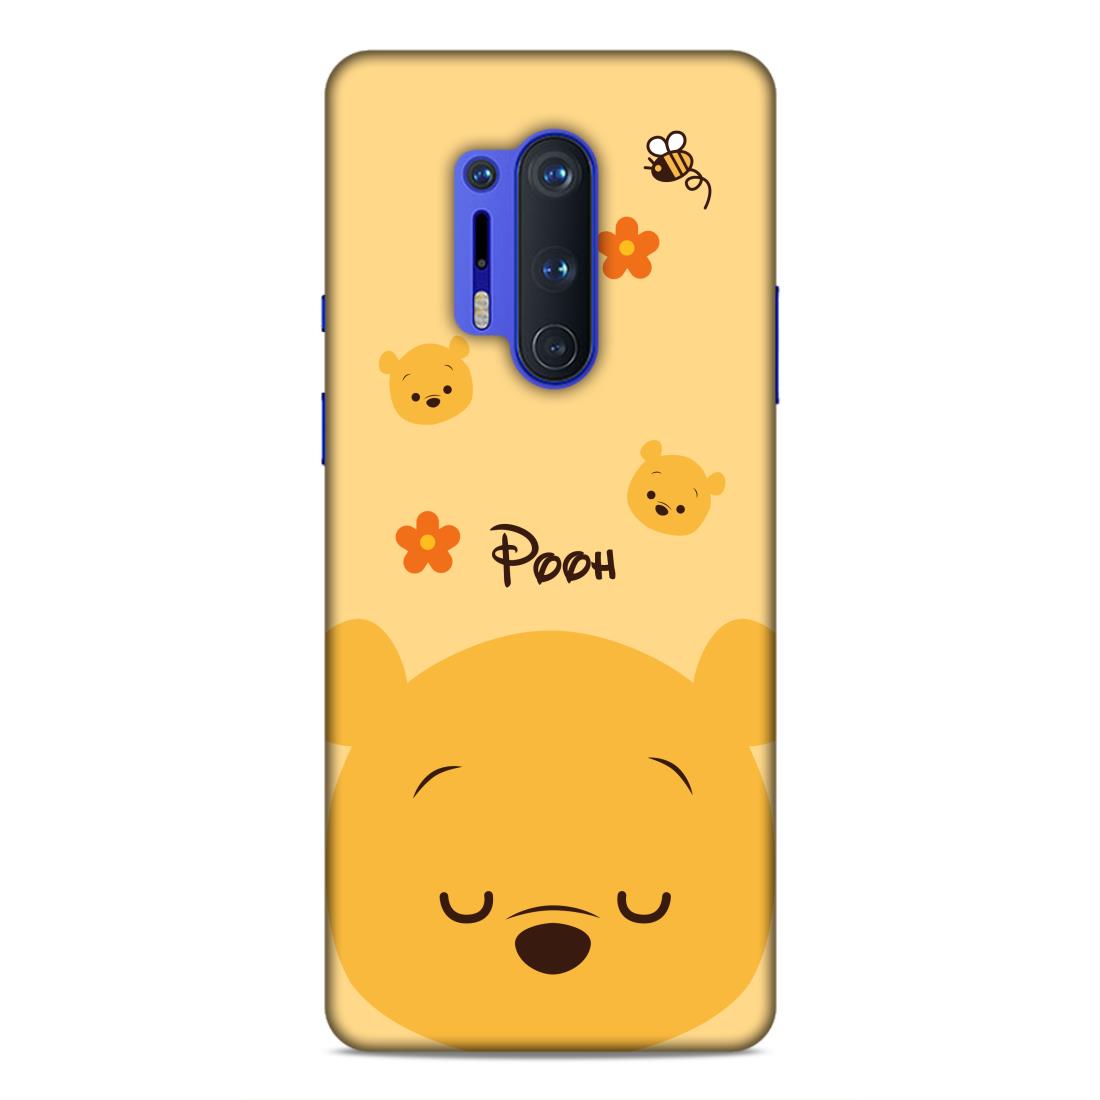 Pooh Cartton Hard Back Case For OnePlus 8 Pro